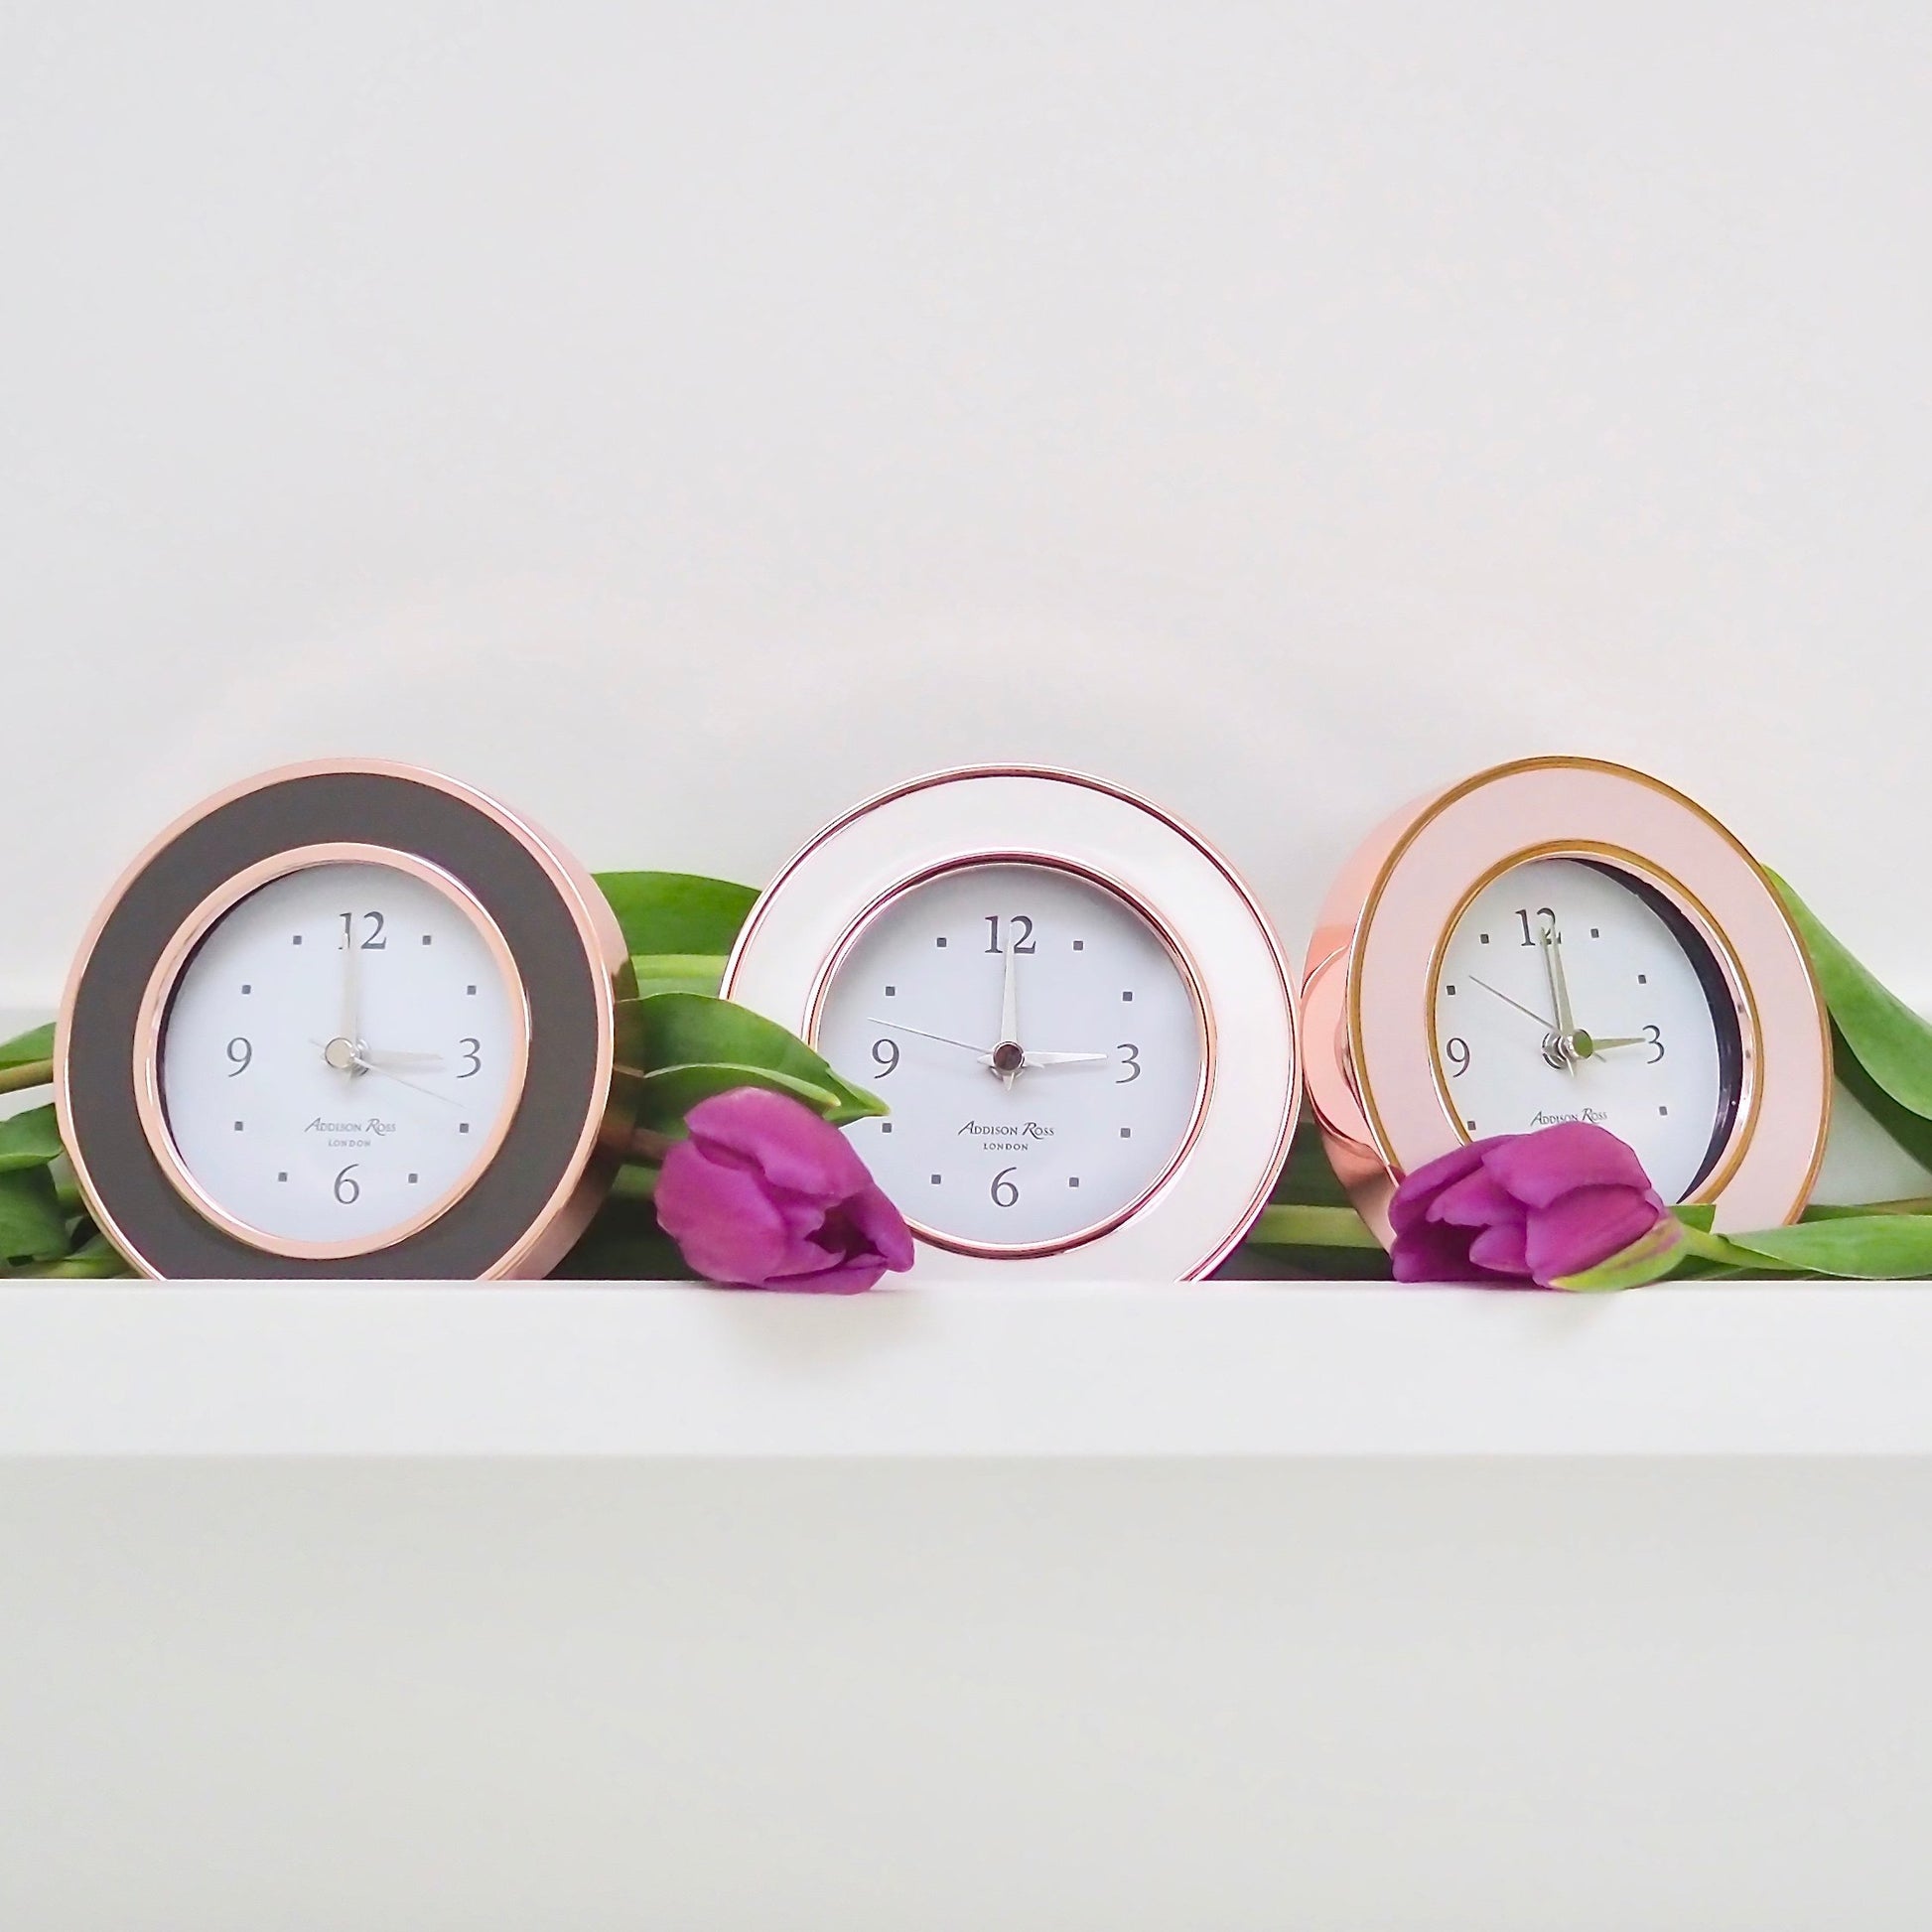 Rose Gold & Taupe Alarm Clock - Addison Ross Ltd UK